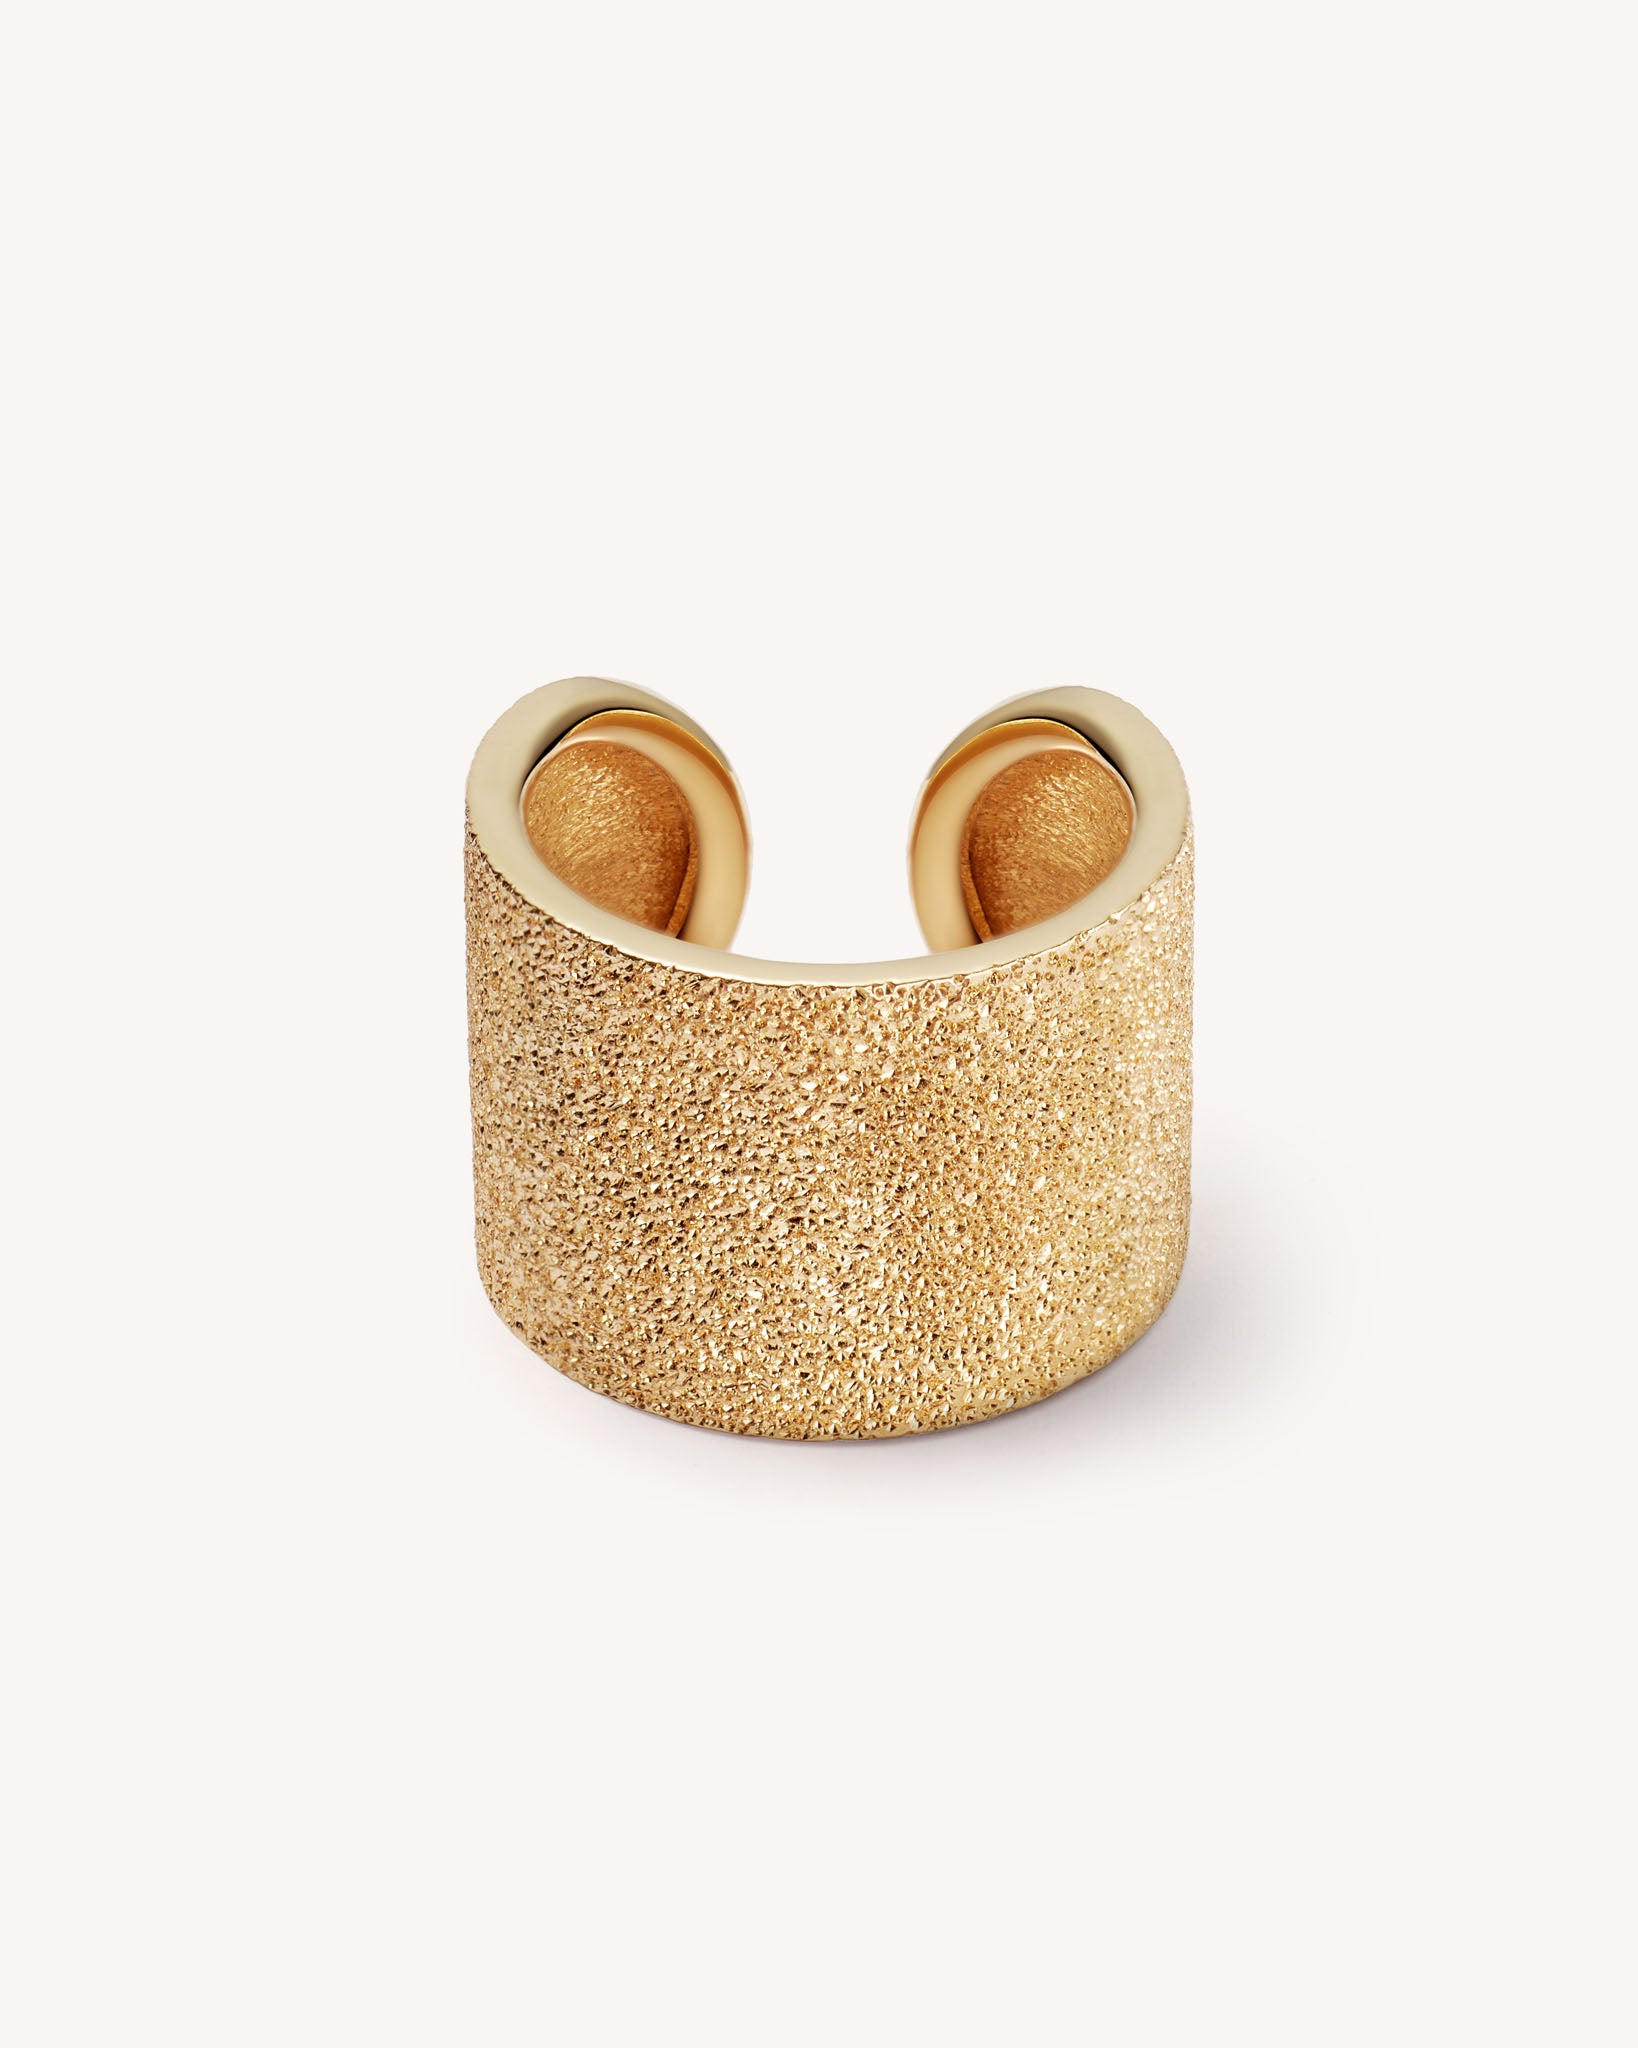 Flor a women's cacique gold ring, Designer Collection